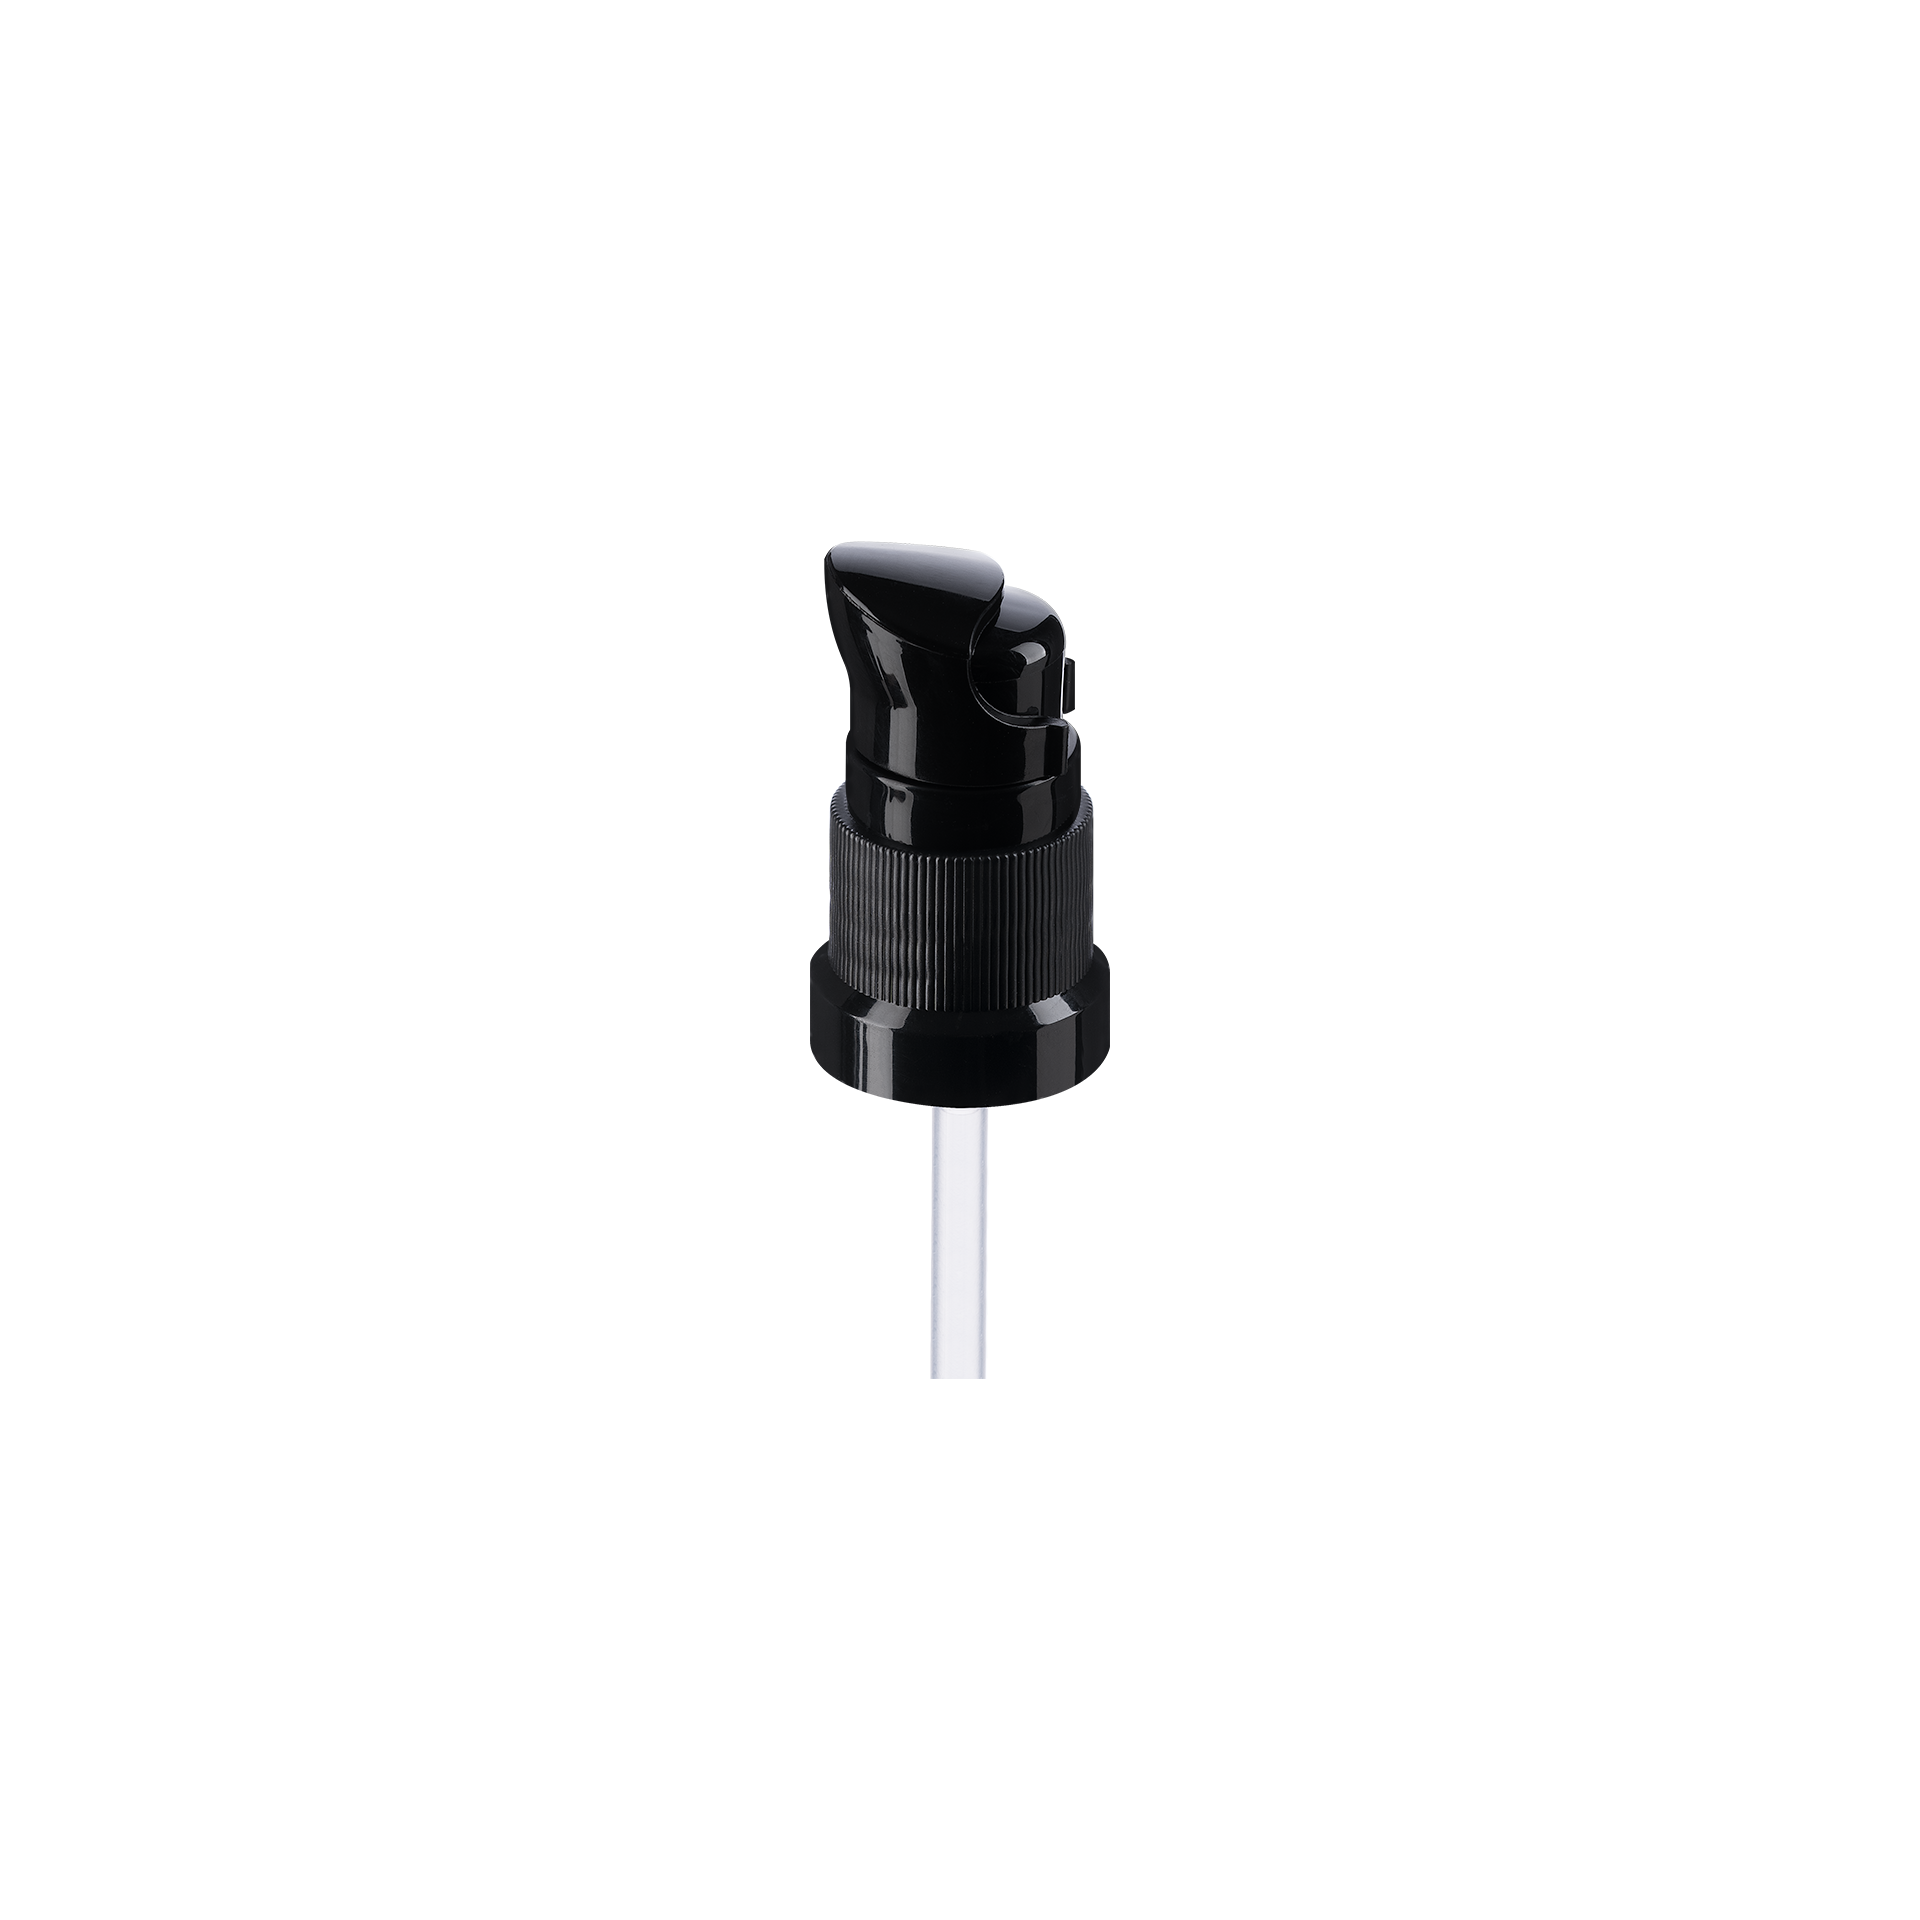 Lotion pump Metropolitan DIN18, PP, black, dose 0.10ml, black security clip (Ginger 100)